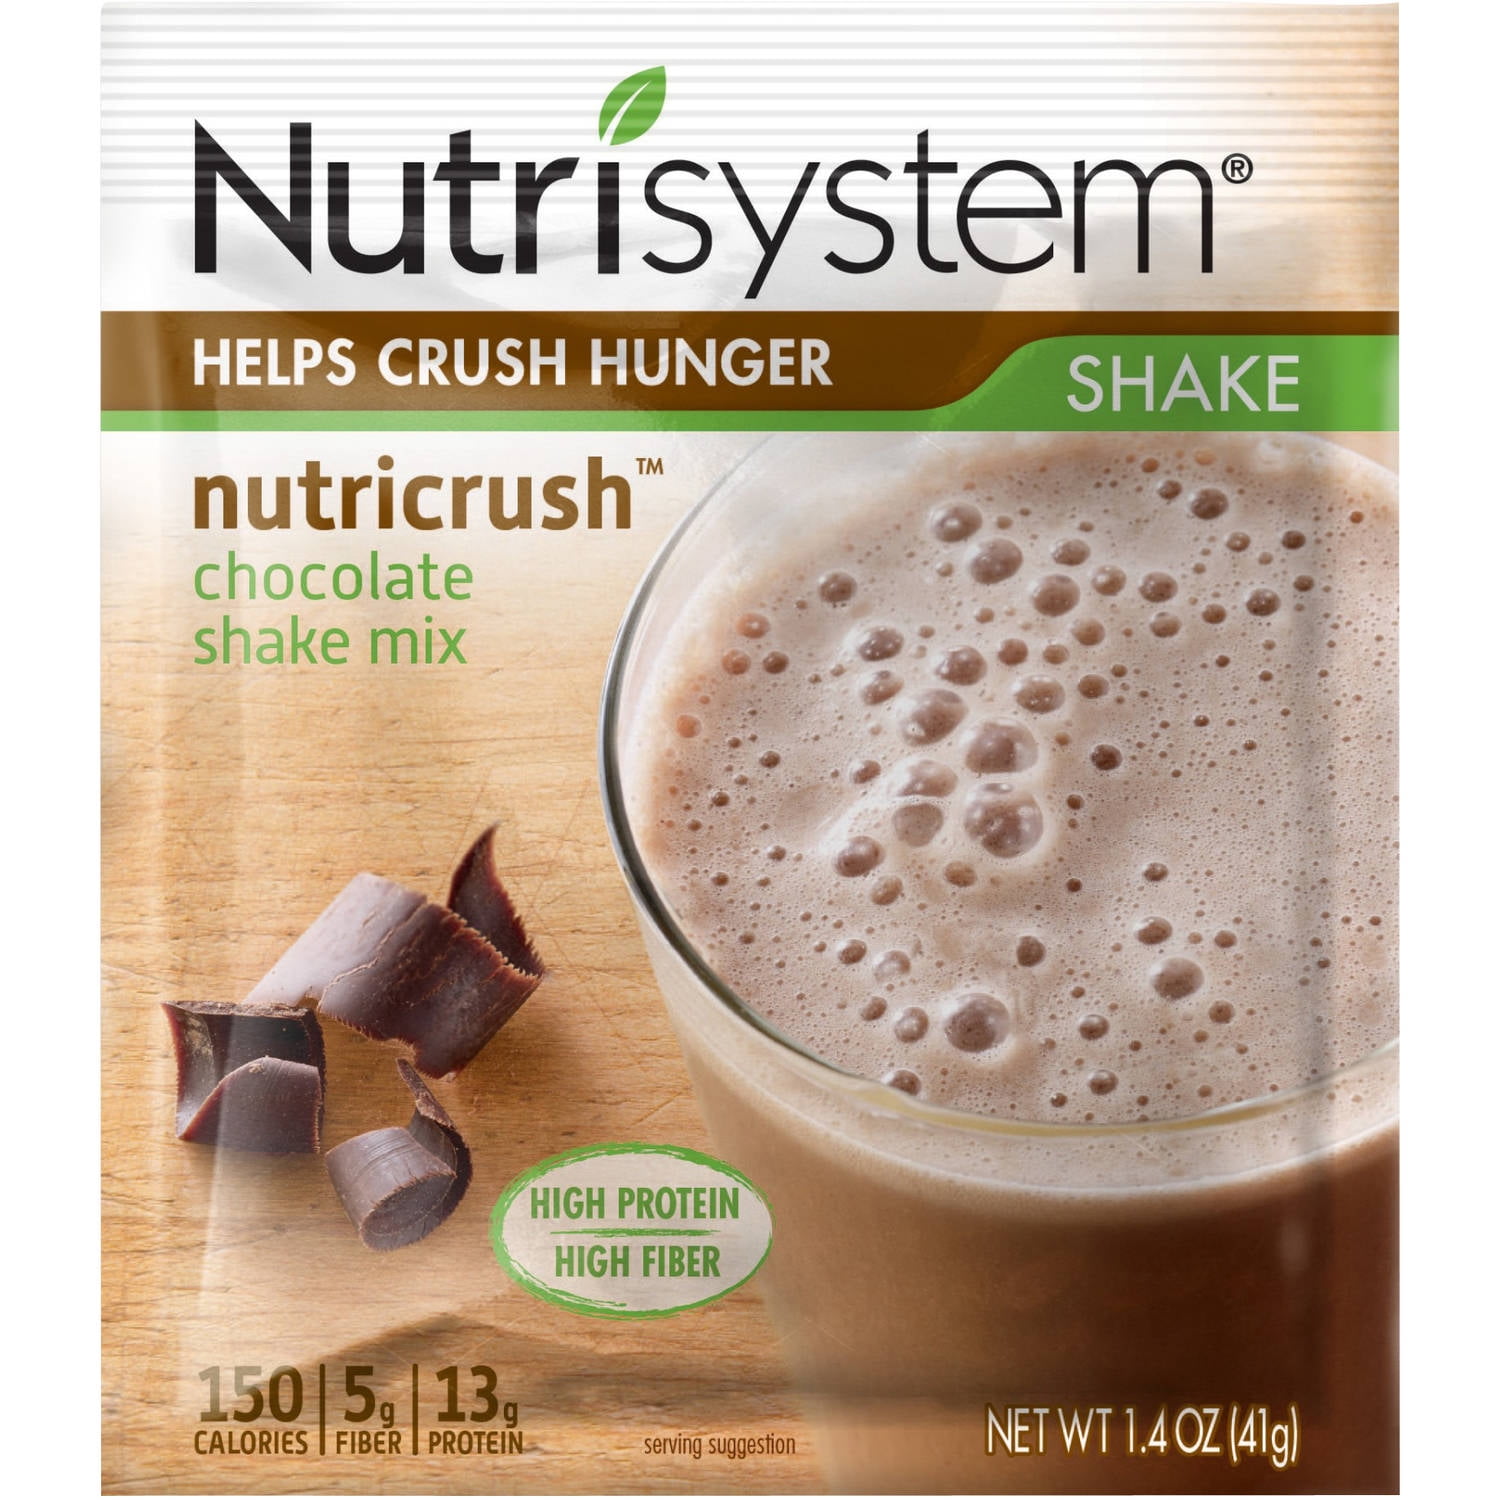 Nutrisystem Coffee Protein Shake Nutrition Facts | Blog Dandk